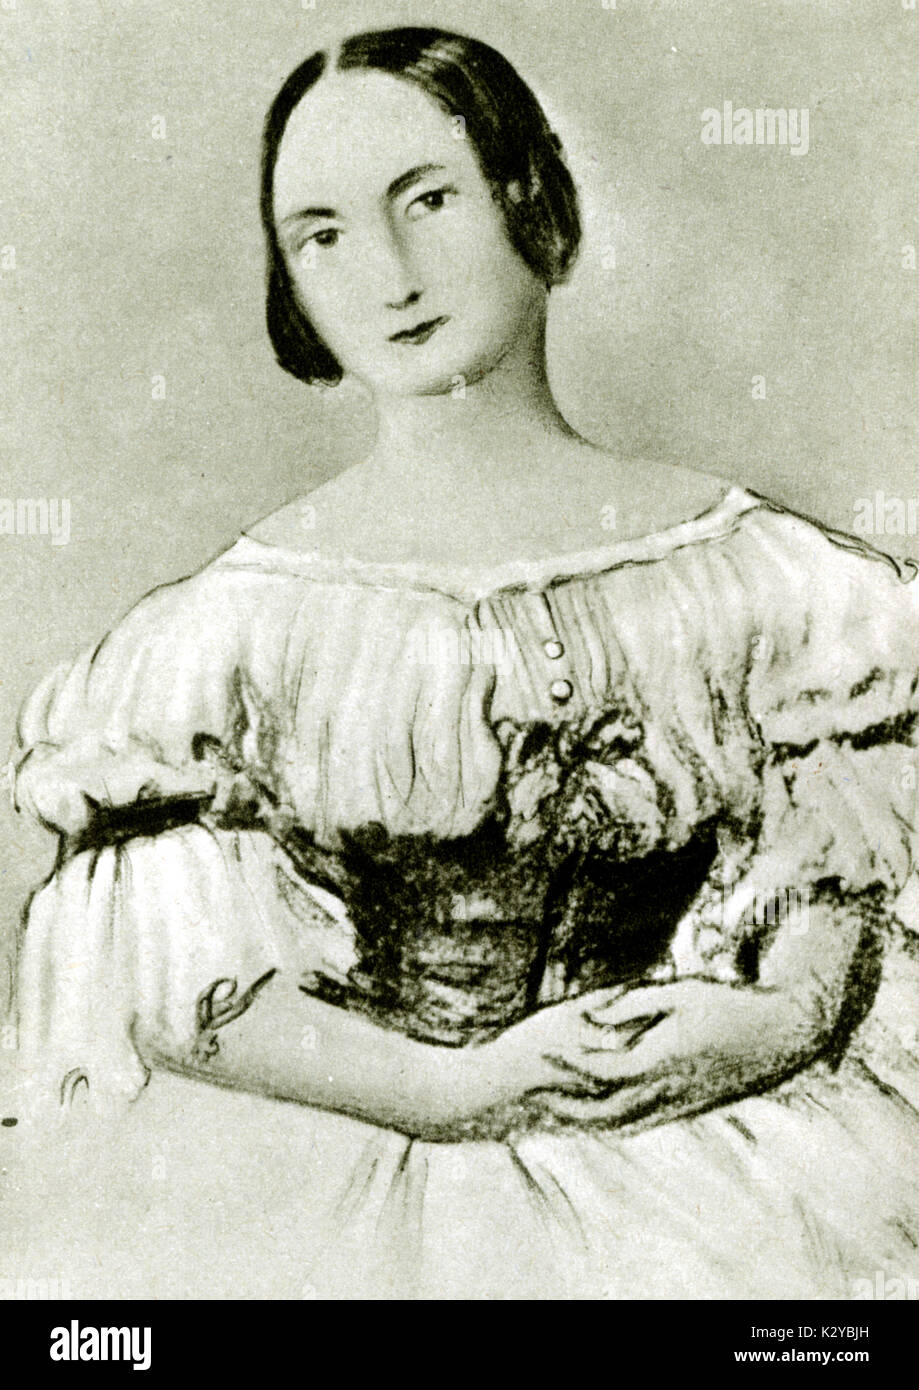 Olimpia Pélessier, 2nd wife of ROSSINI -  Italian composer,  29 February 1792 - 13 November 1868. Stock Photo